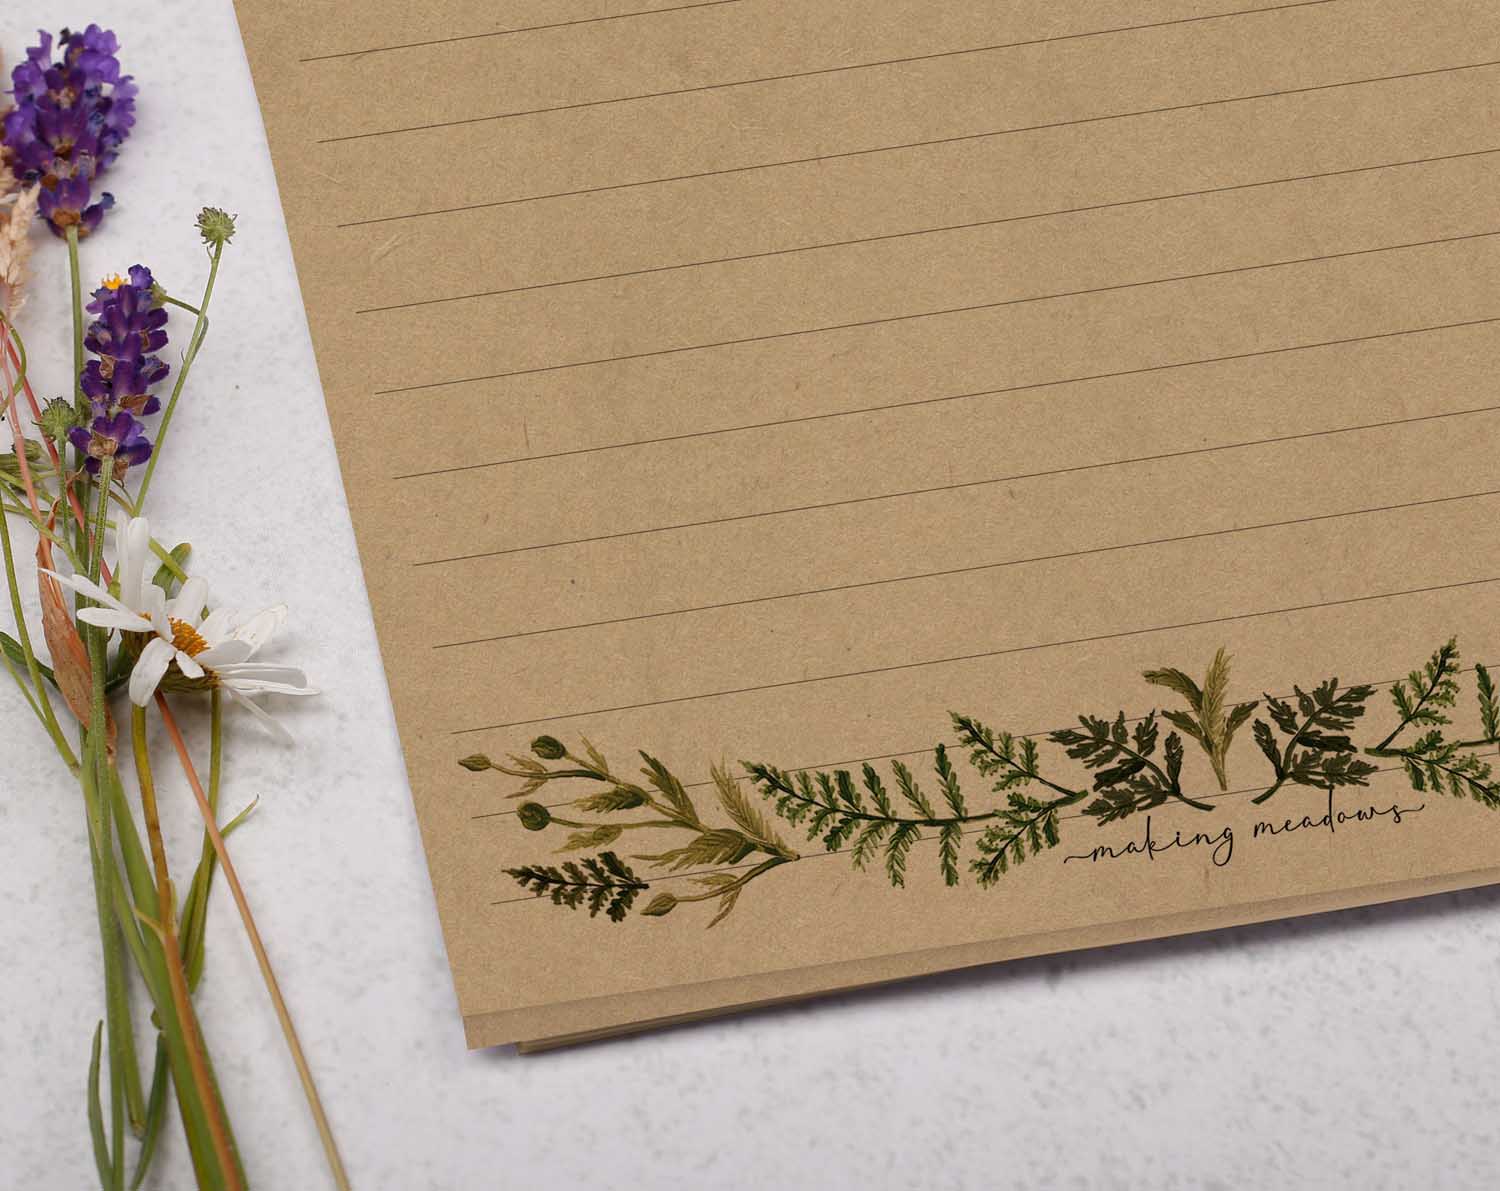 A5 Kraft letter writing paper sheets with botanical leaf edge design.